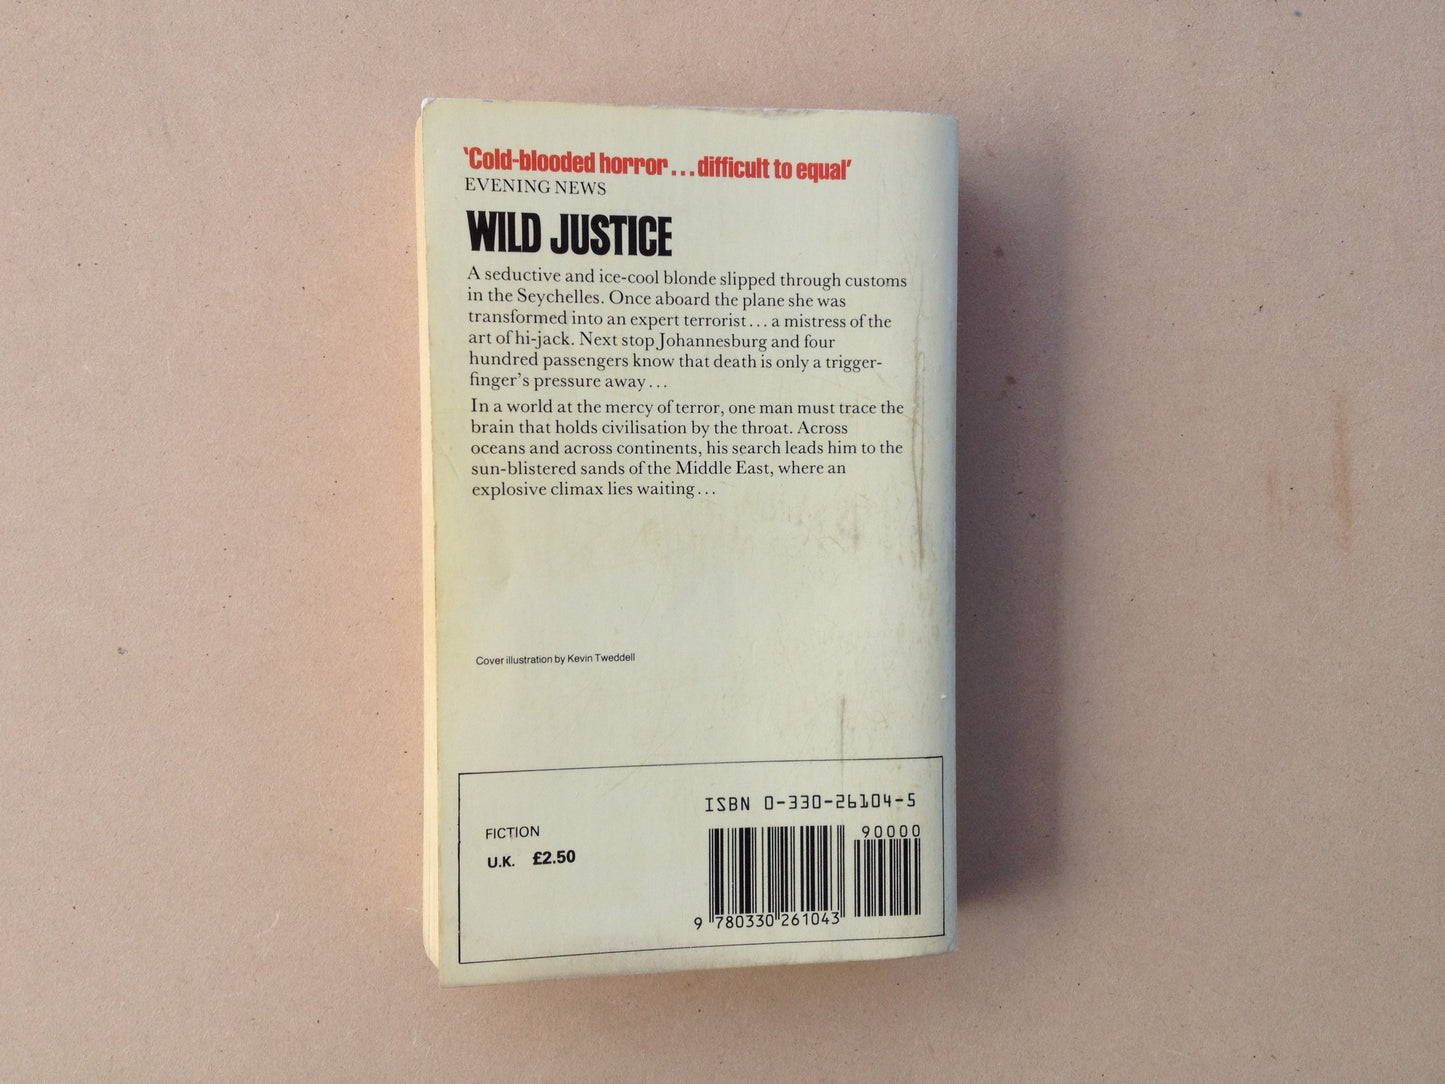 Wild Justice by Wilbur Smith